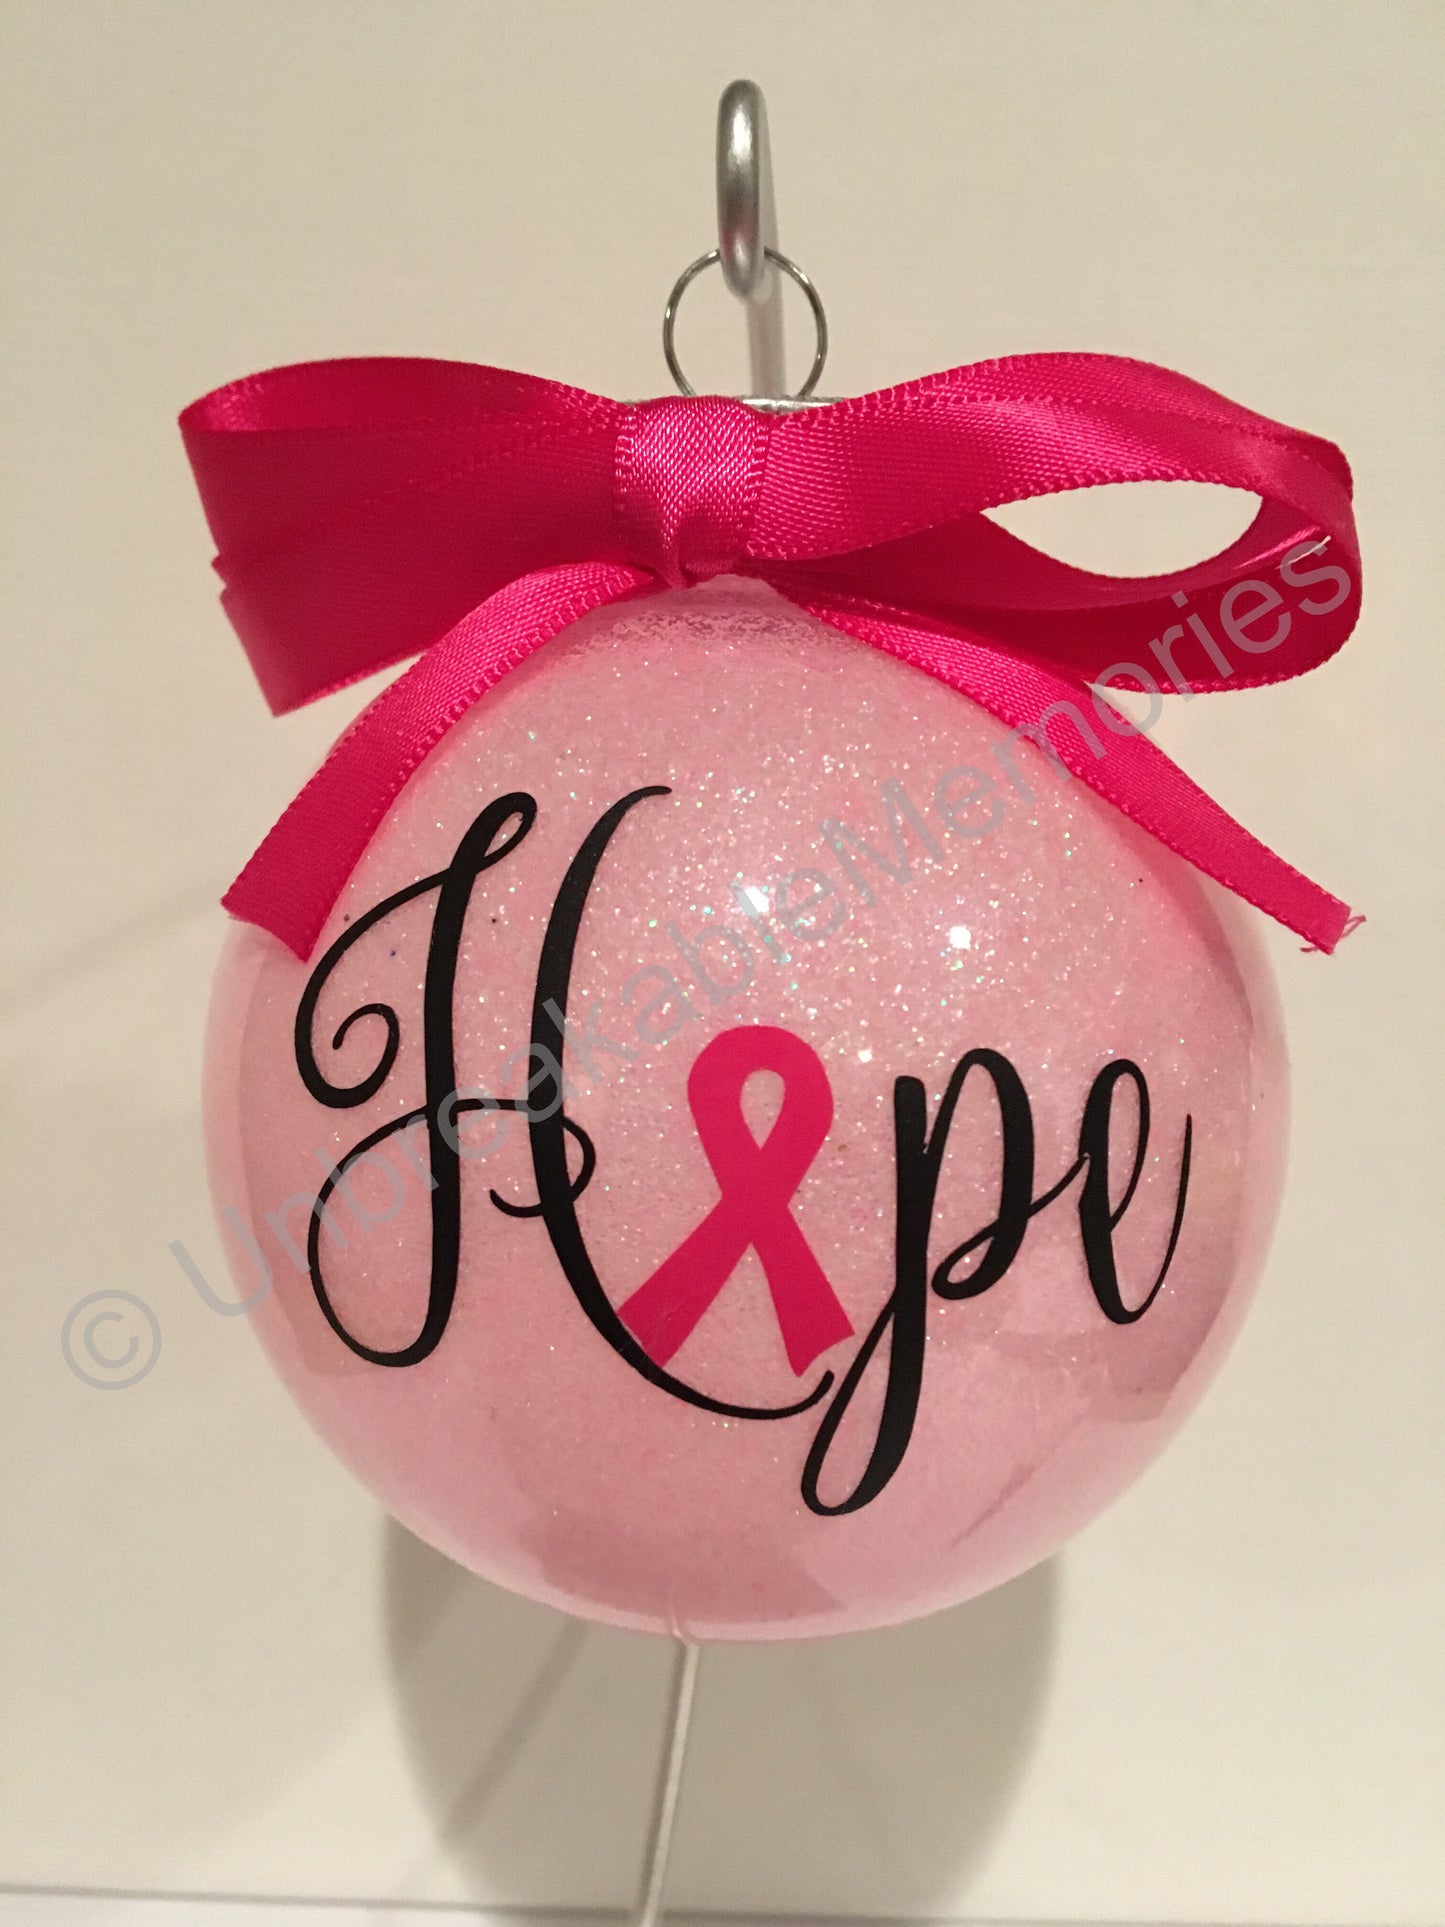 Breast Cancer Awareness ornament - Unbreakable Memories